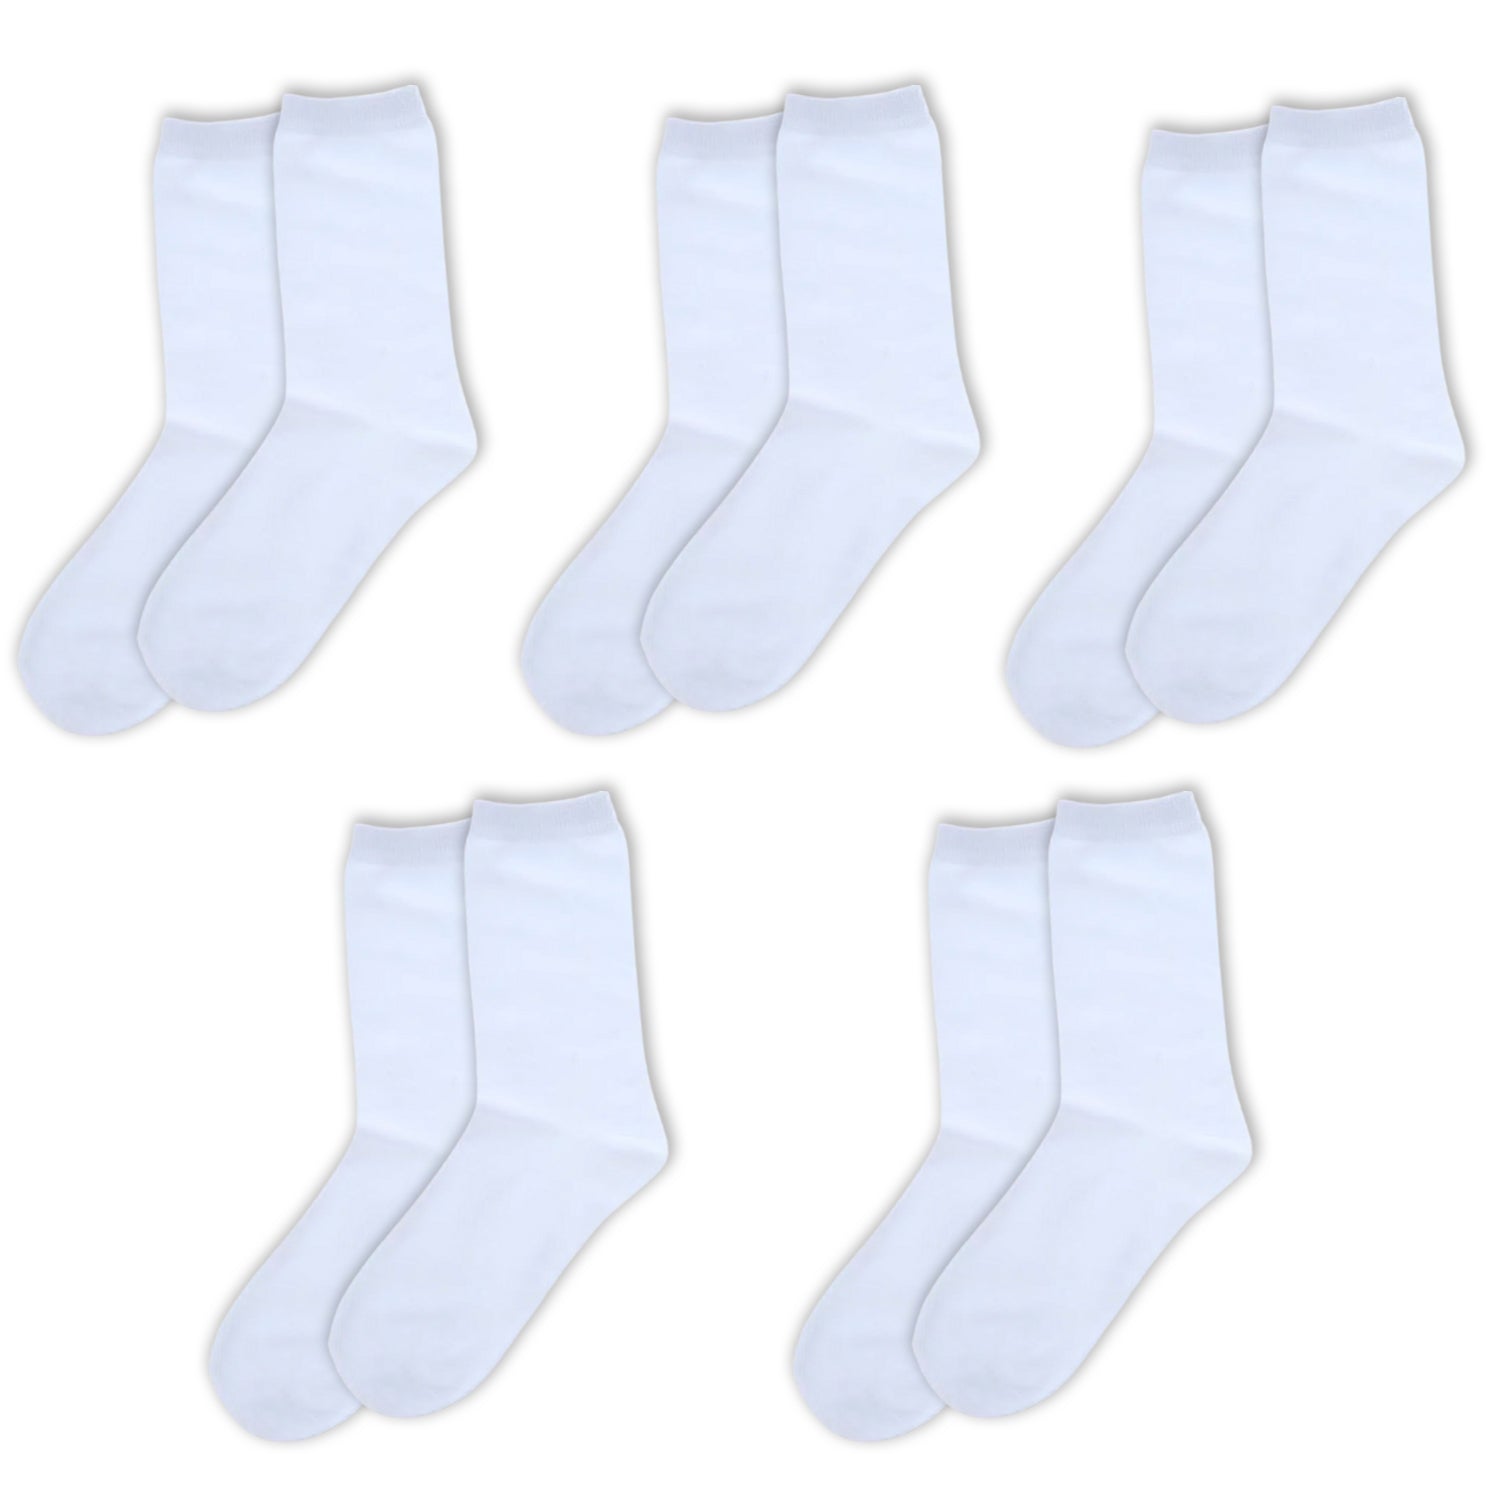 White Newborn Baby Socks by Nurses Choice - Includes 6 Pairs of Unisex Cotton Socks